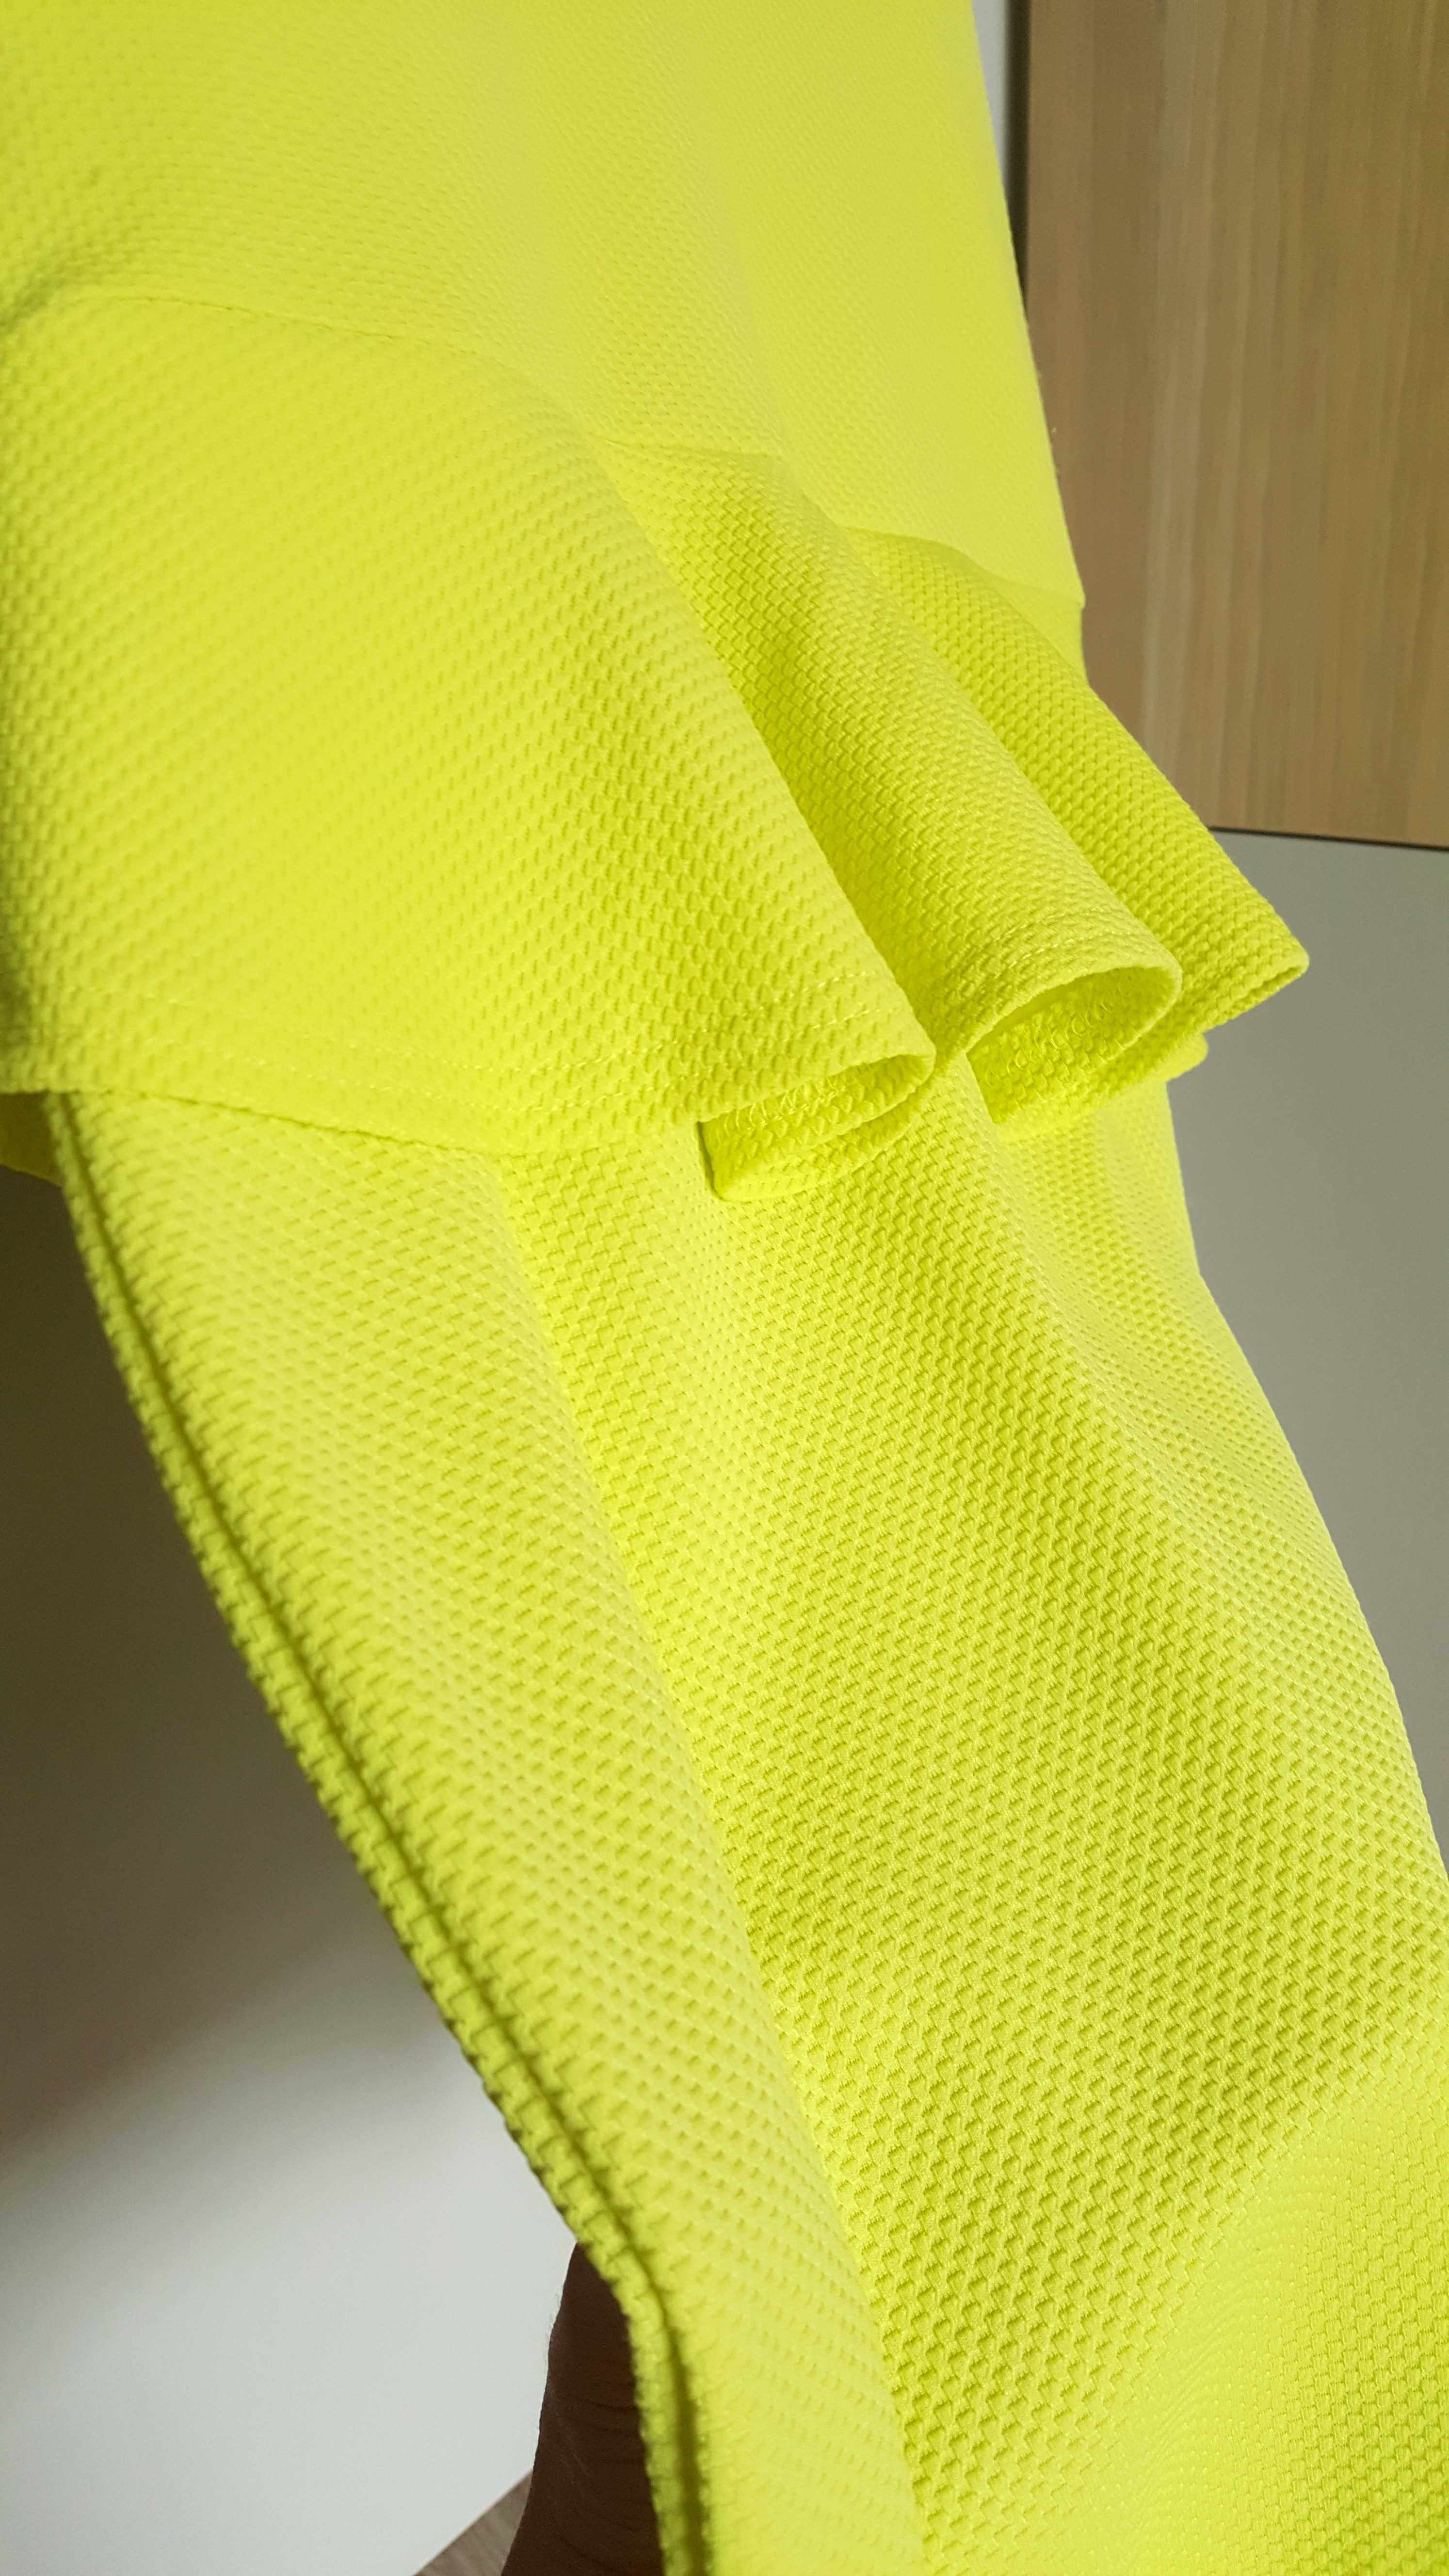 sukienka neonowa zielona rażąca neon żółta mini